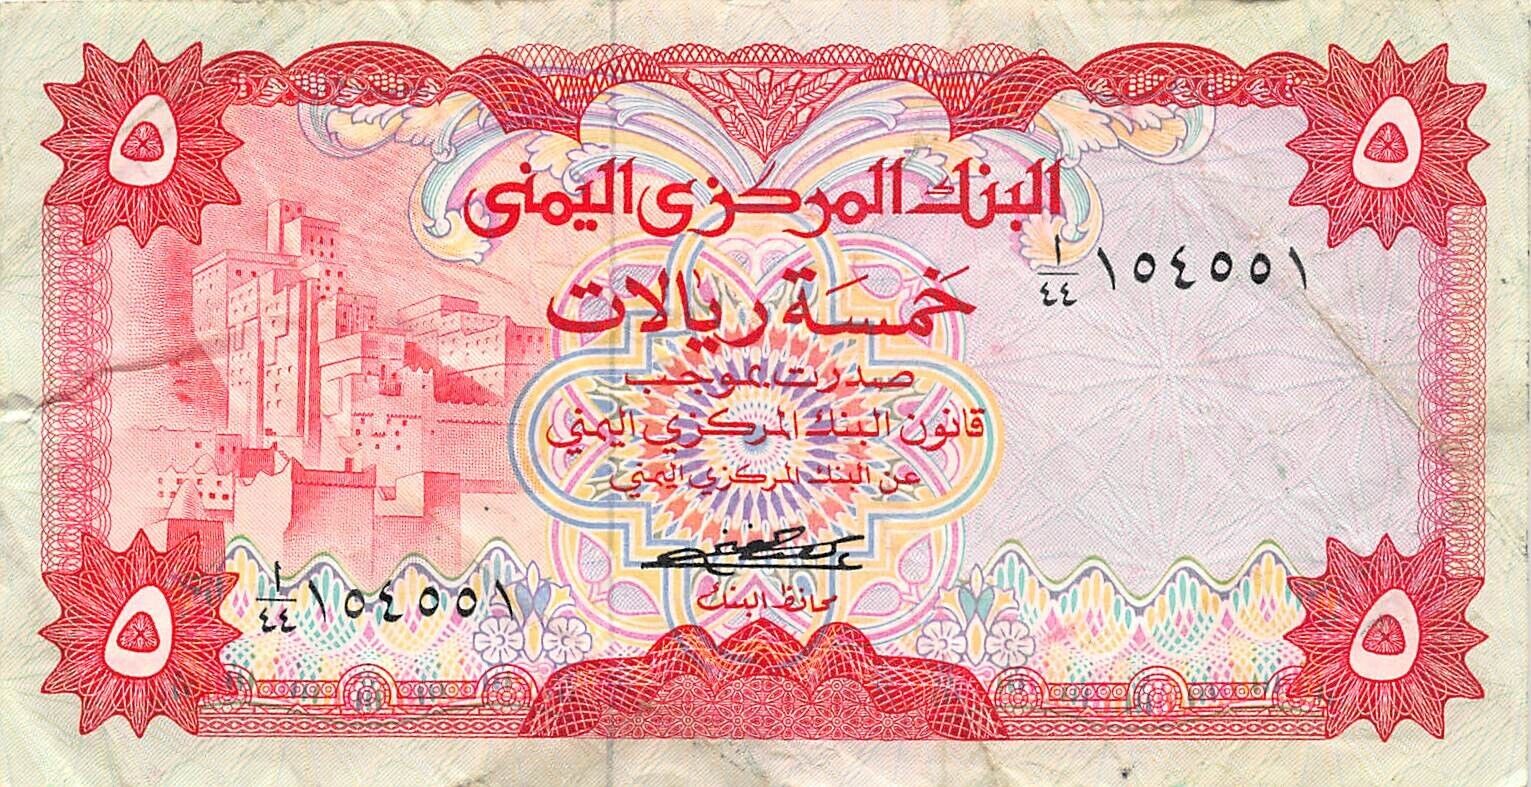 Yemen  5  Rials  1973  P 12a  Series  A/44  Circulated Banknote Z 7